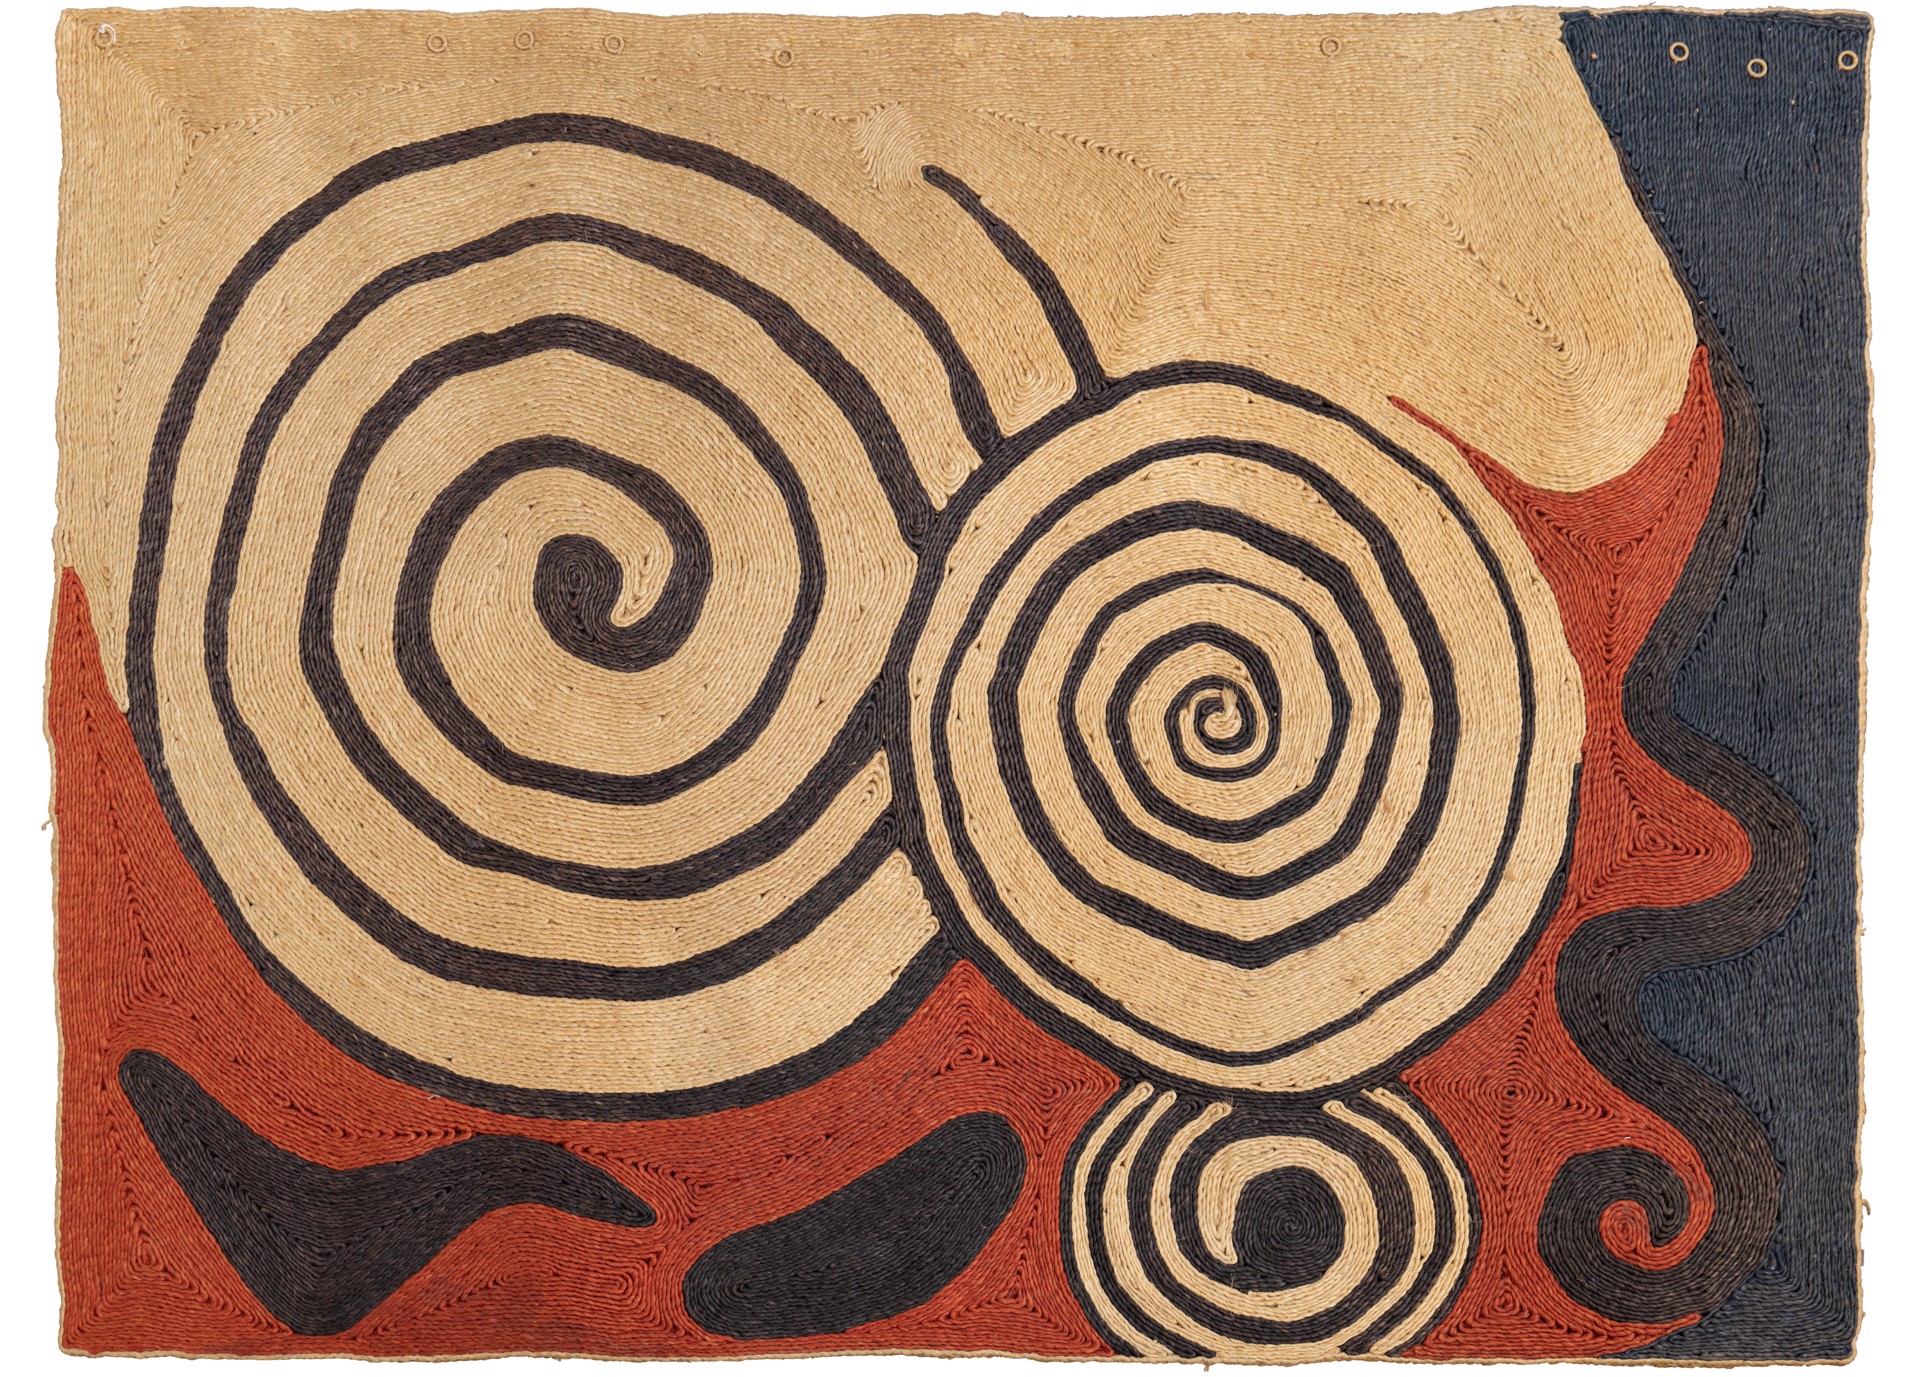 Three Concentric Circles by Alexander Calder